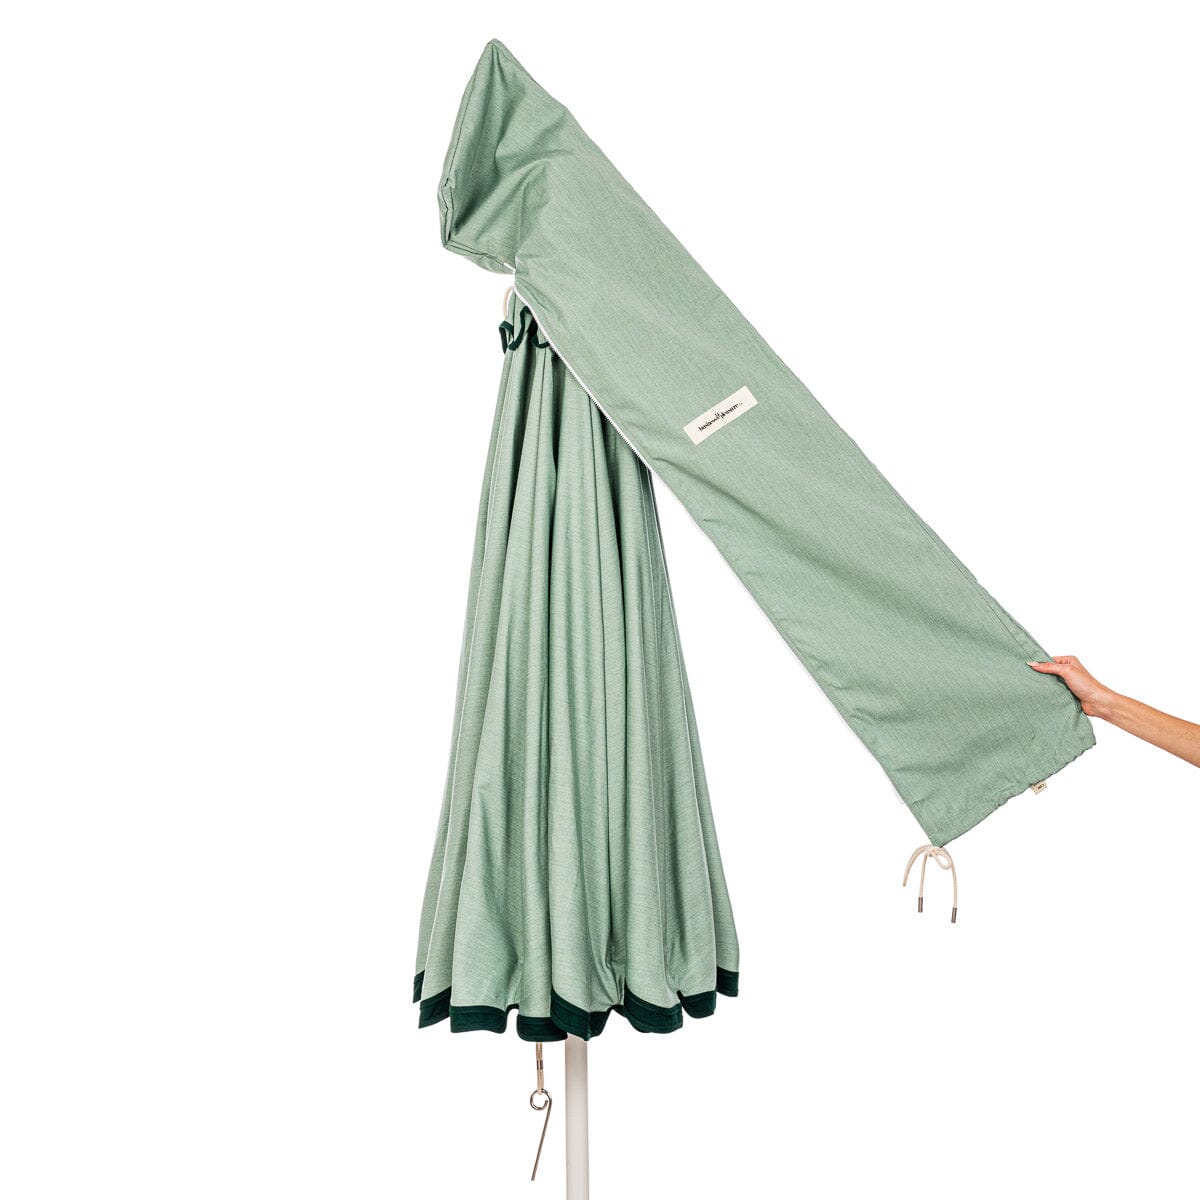 carry bag detail on green patio umbrella